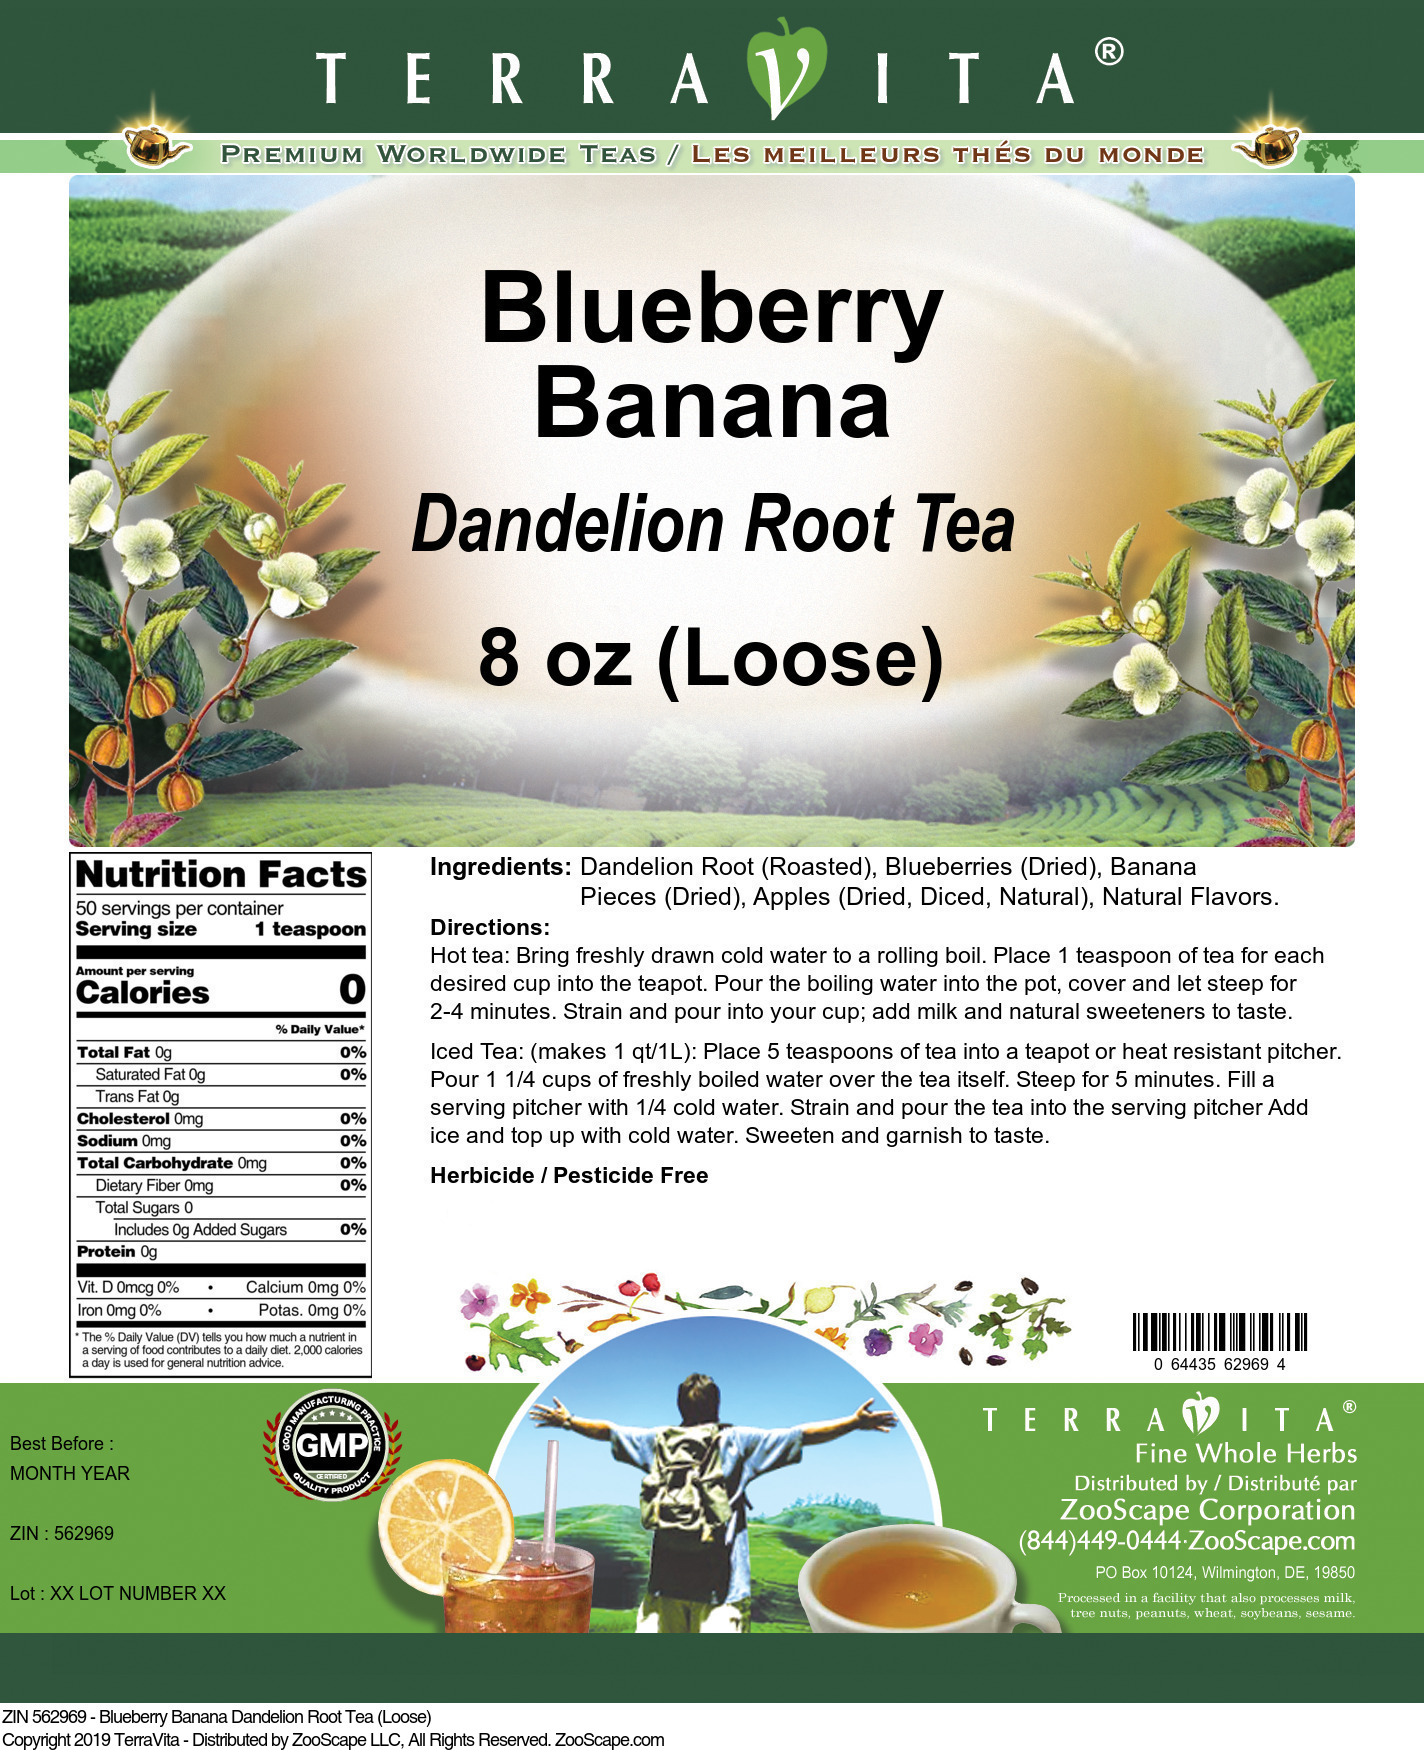 Blueberry Banana Dandelion Root Tea (Loose) - Label